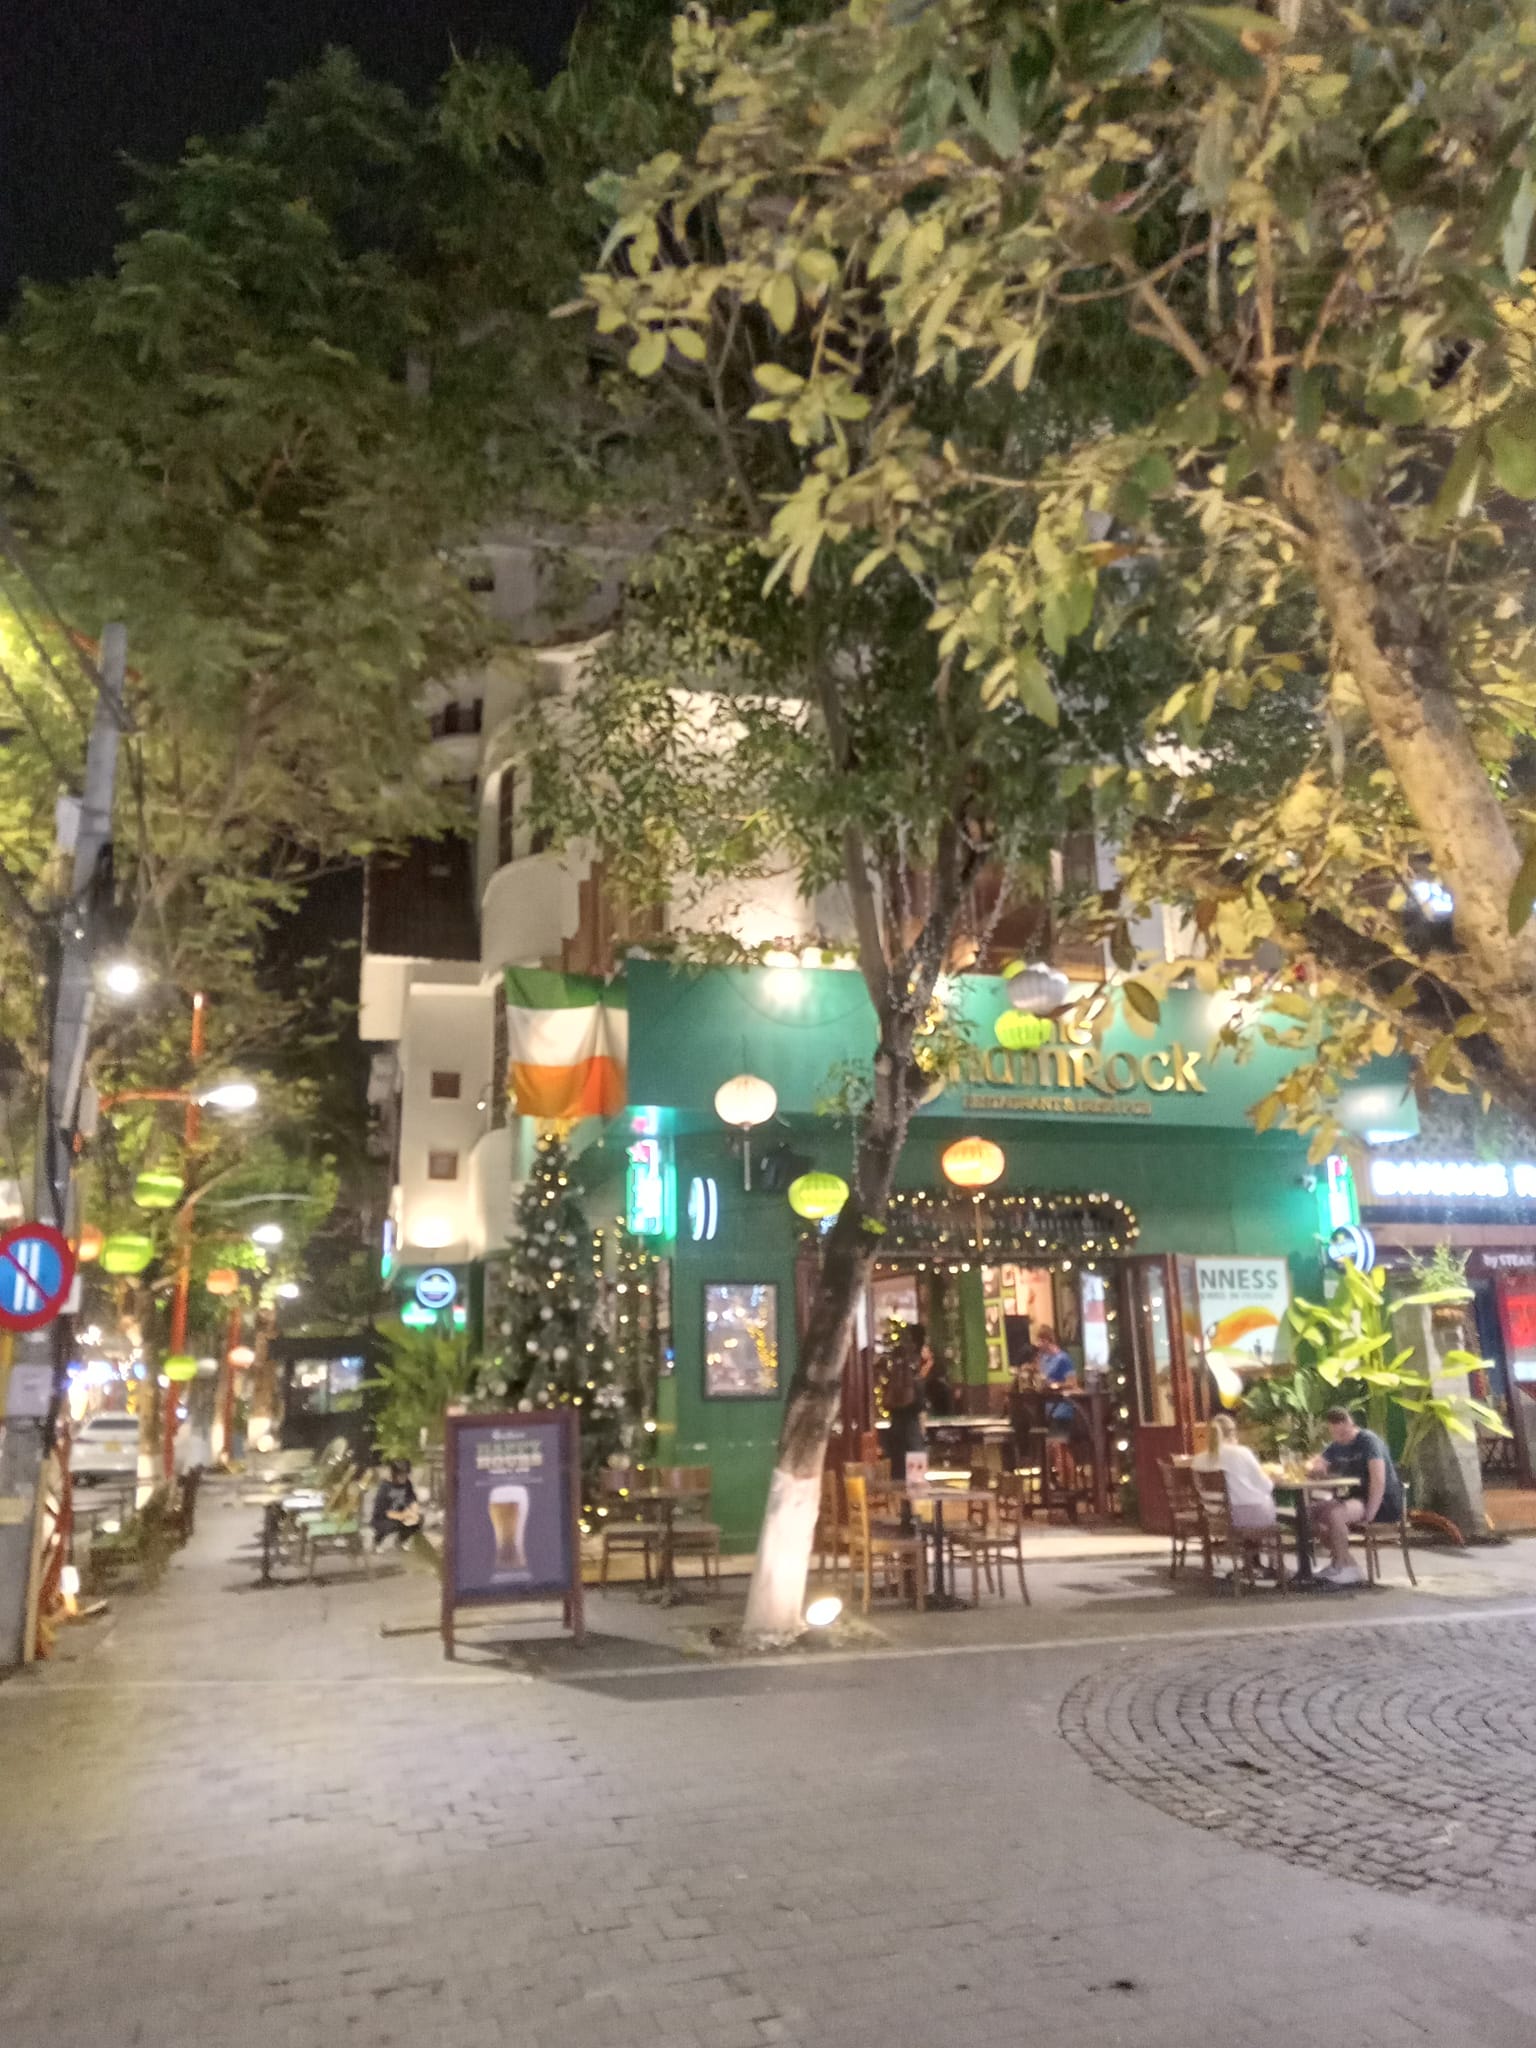 Lucky Shamrock Irish Pub with live music in Da Nang, Vietnam